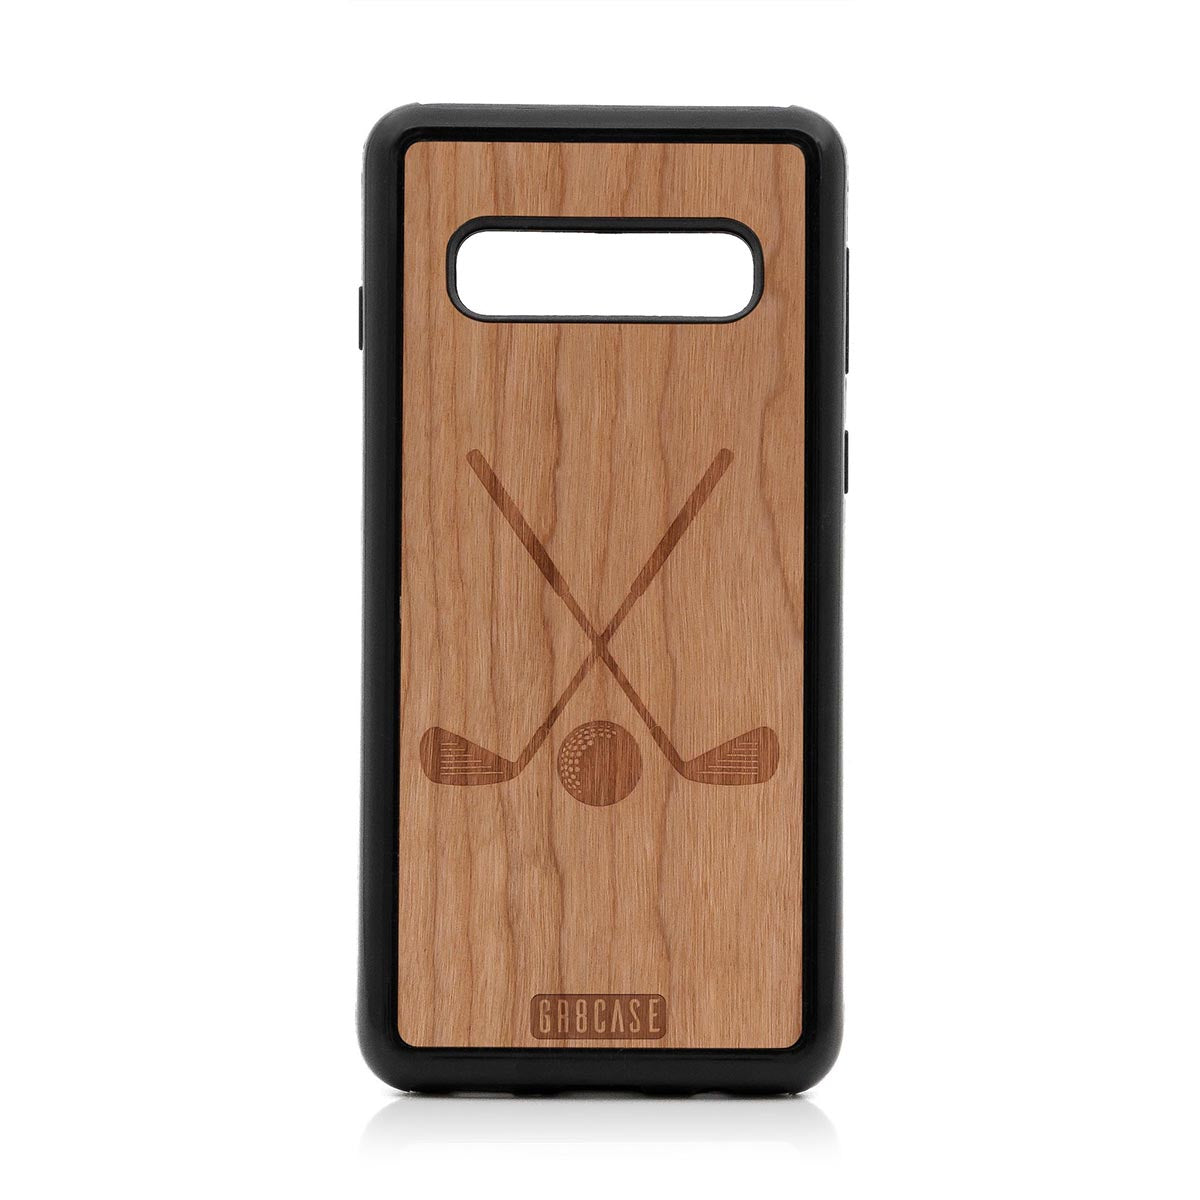 Golf Design Wood Case For Samsung Galaxy S10 by GR8CASE